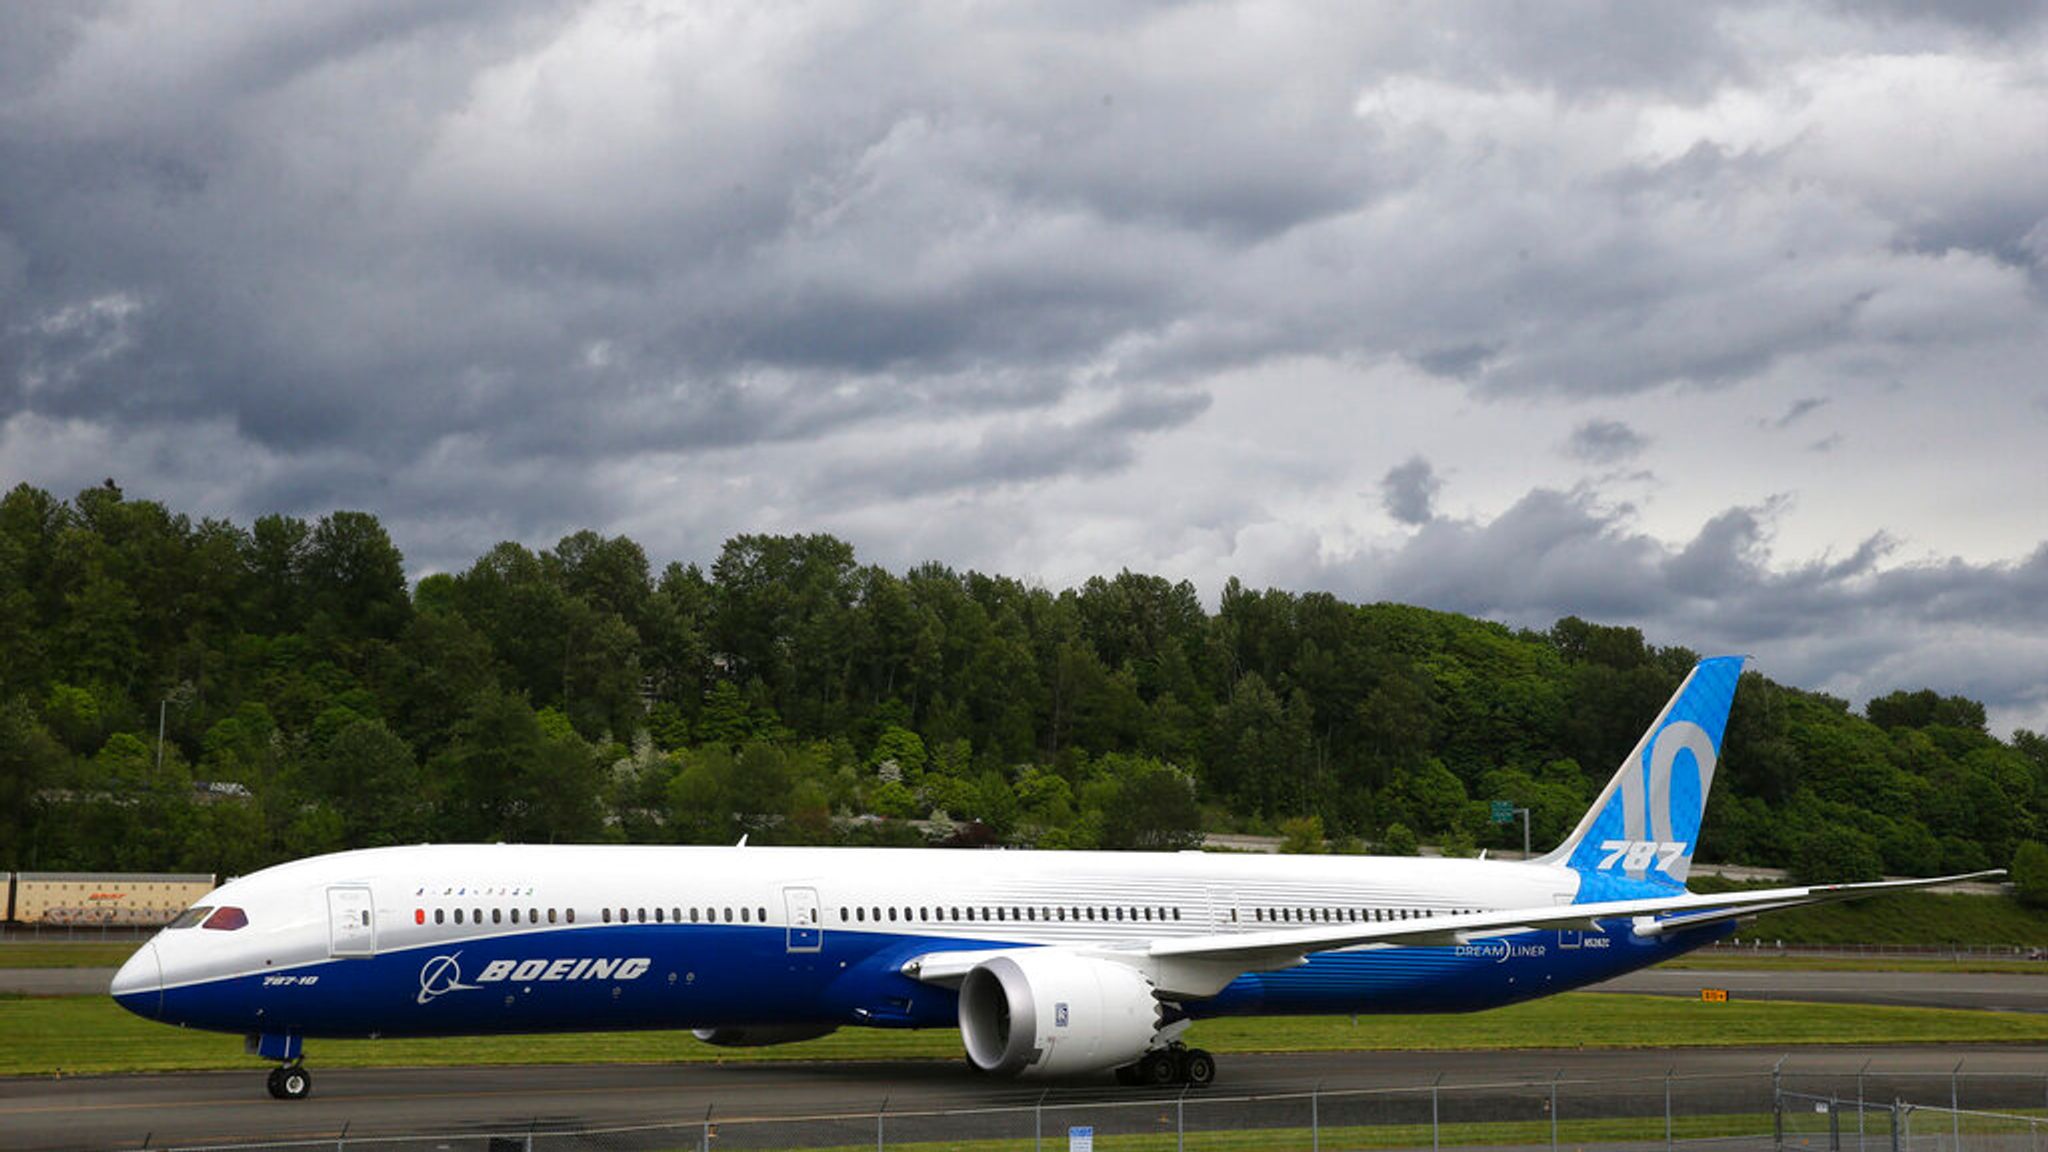 Boeing whistleblower claims 787 Dreamliner planes ‘defective’